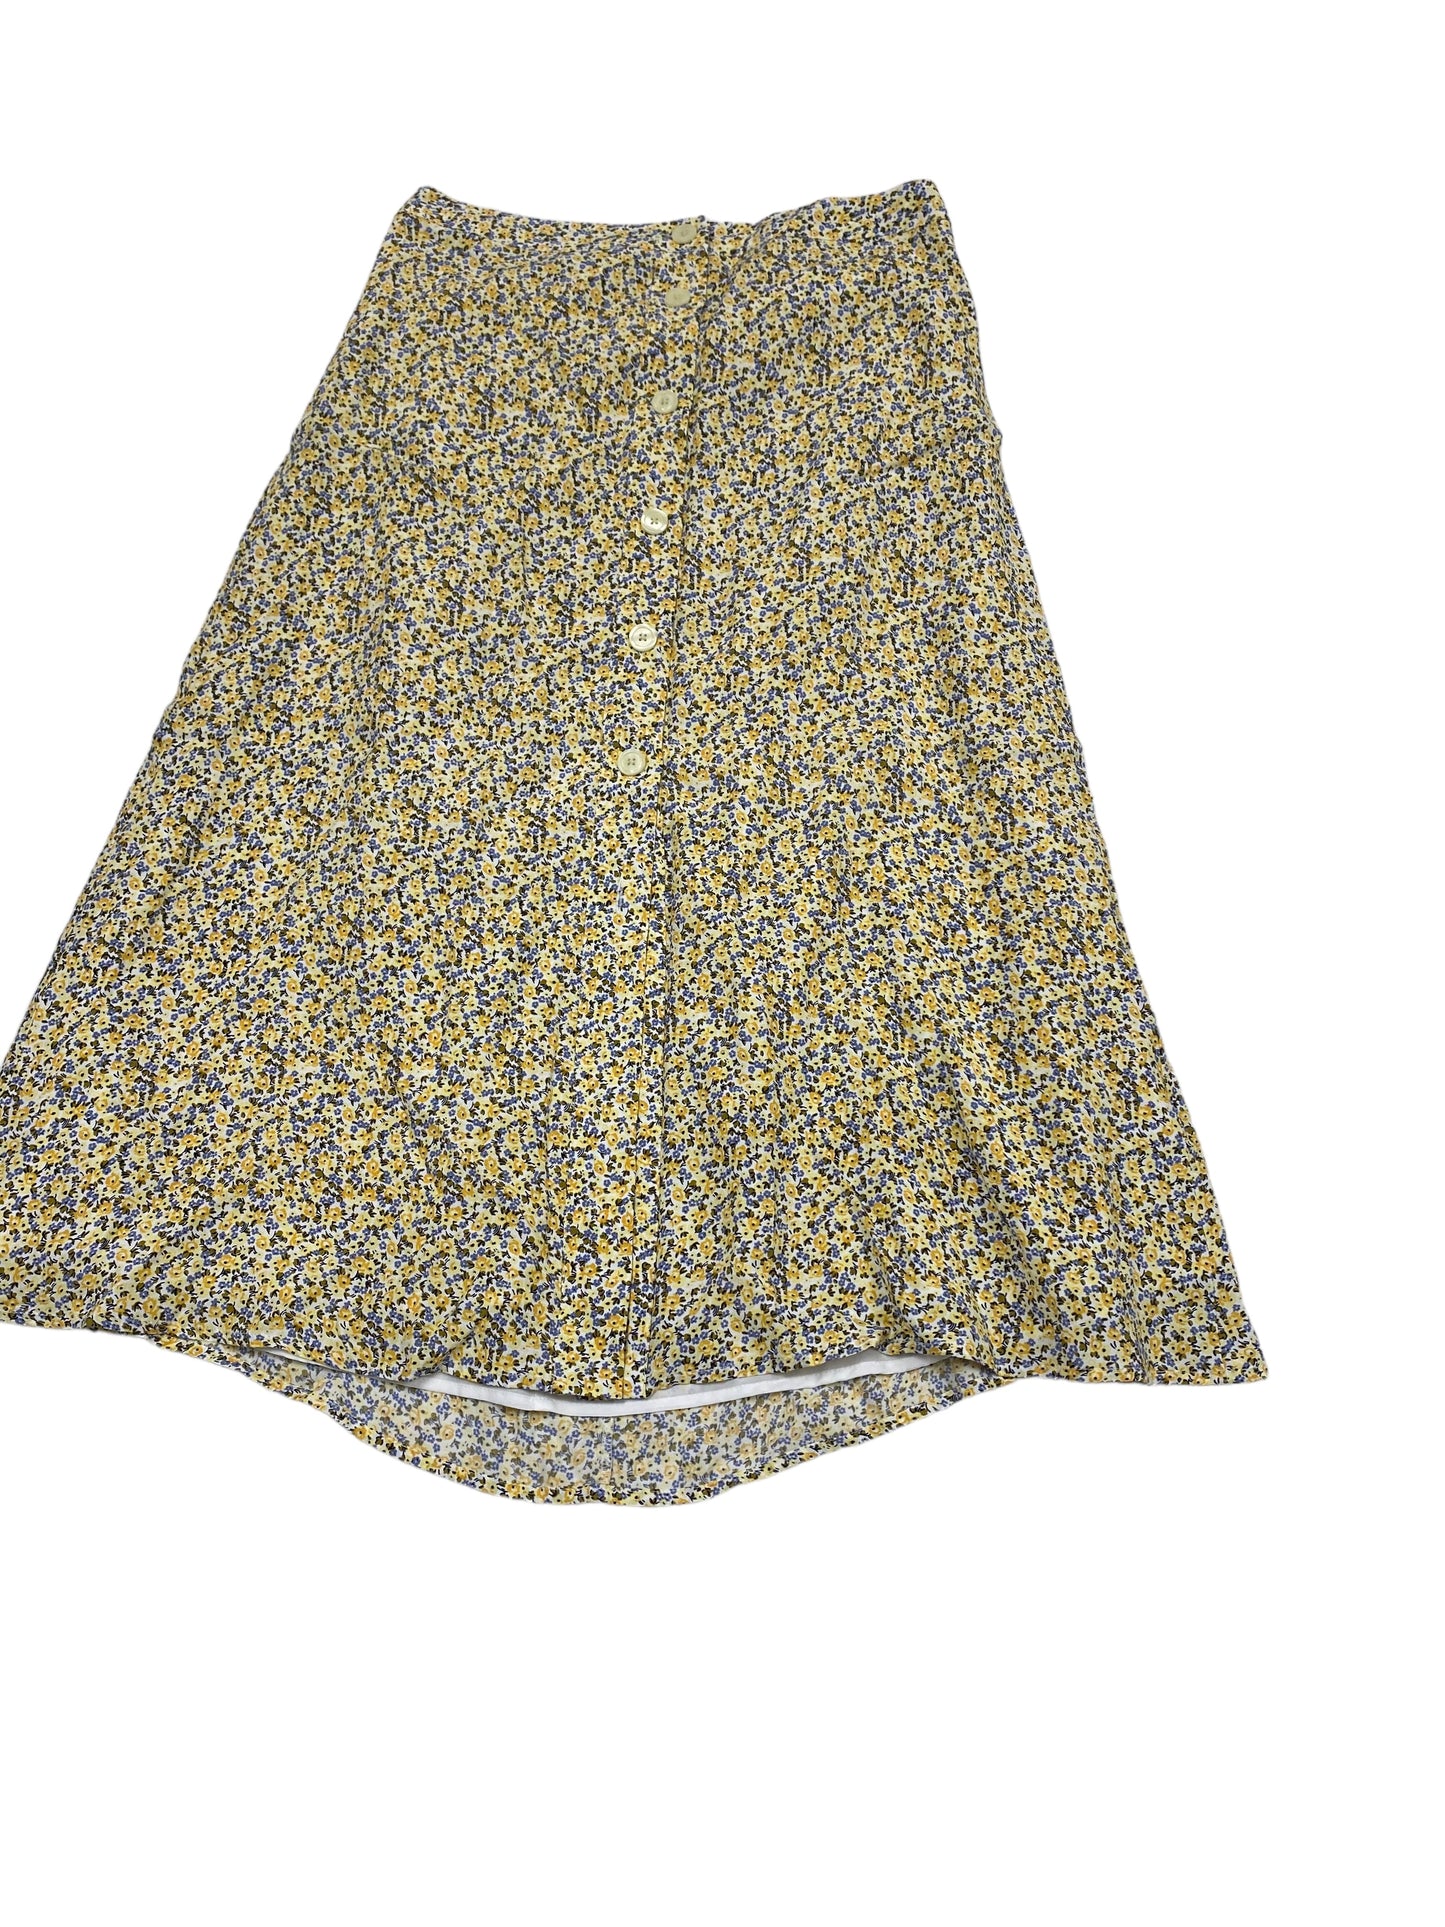 Blue & Yellow Skirt Maxi Gap, Size 10